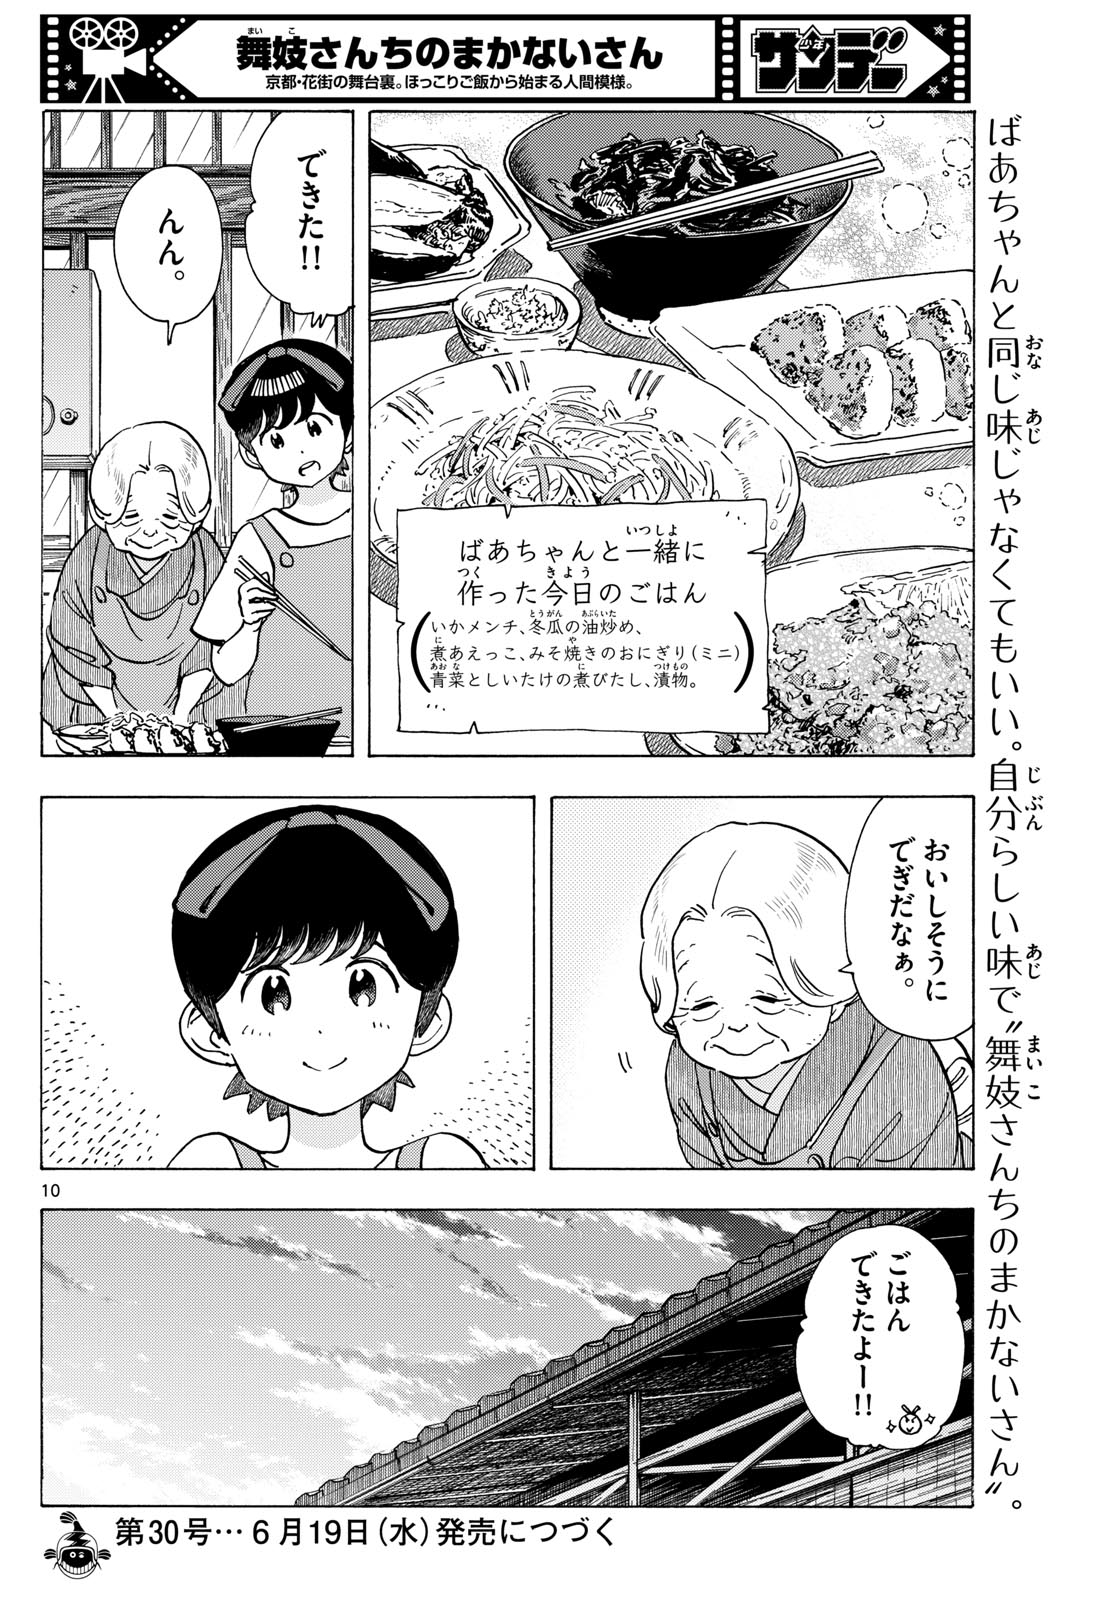 Maiko-san Chi no Makanai-san - Chapter 304 - Page 10